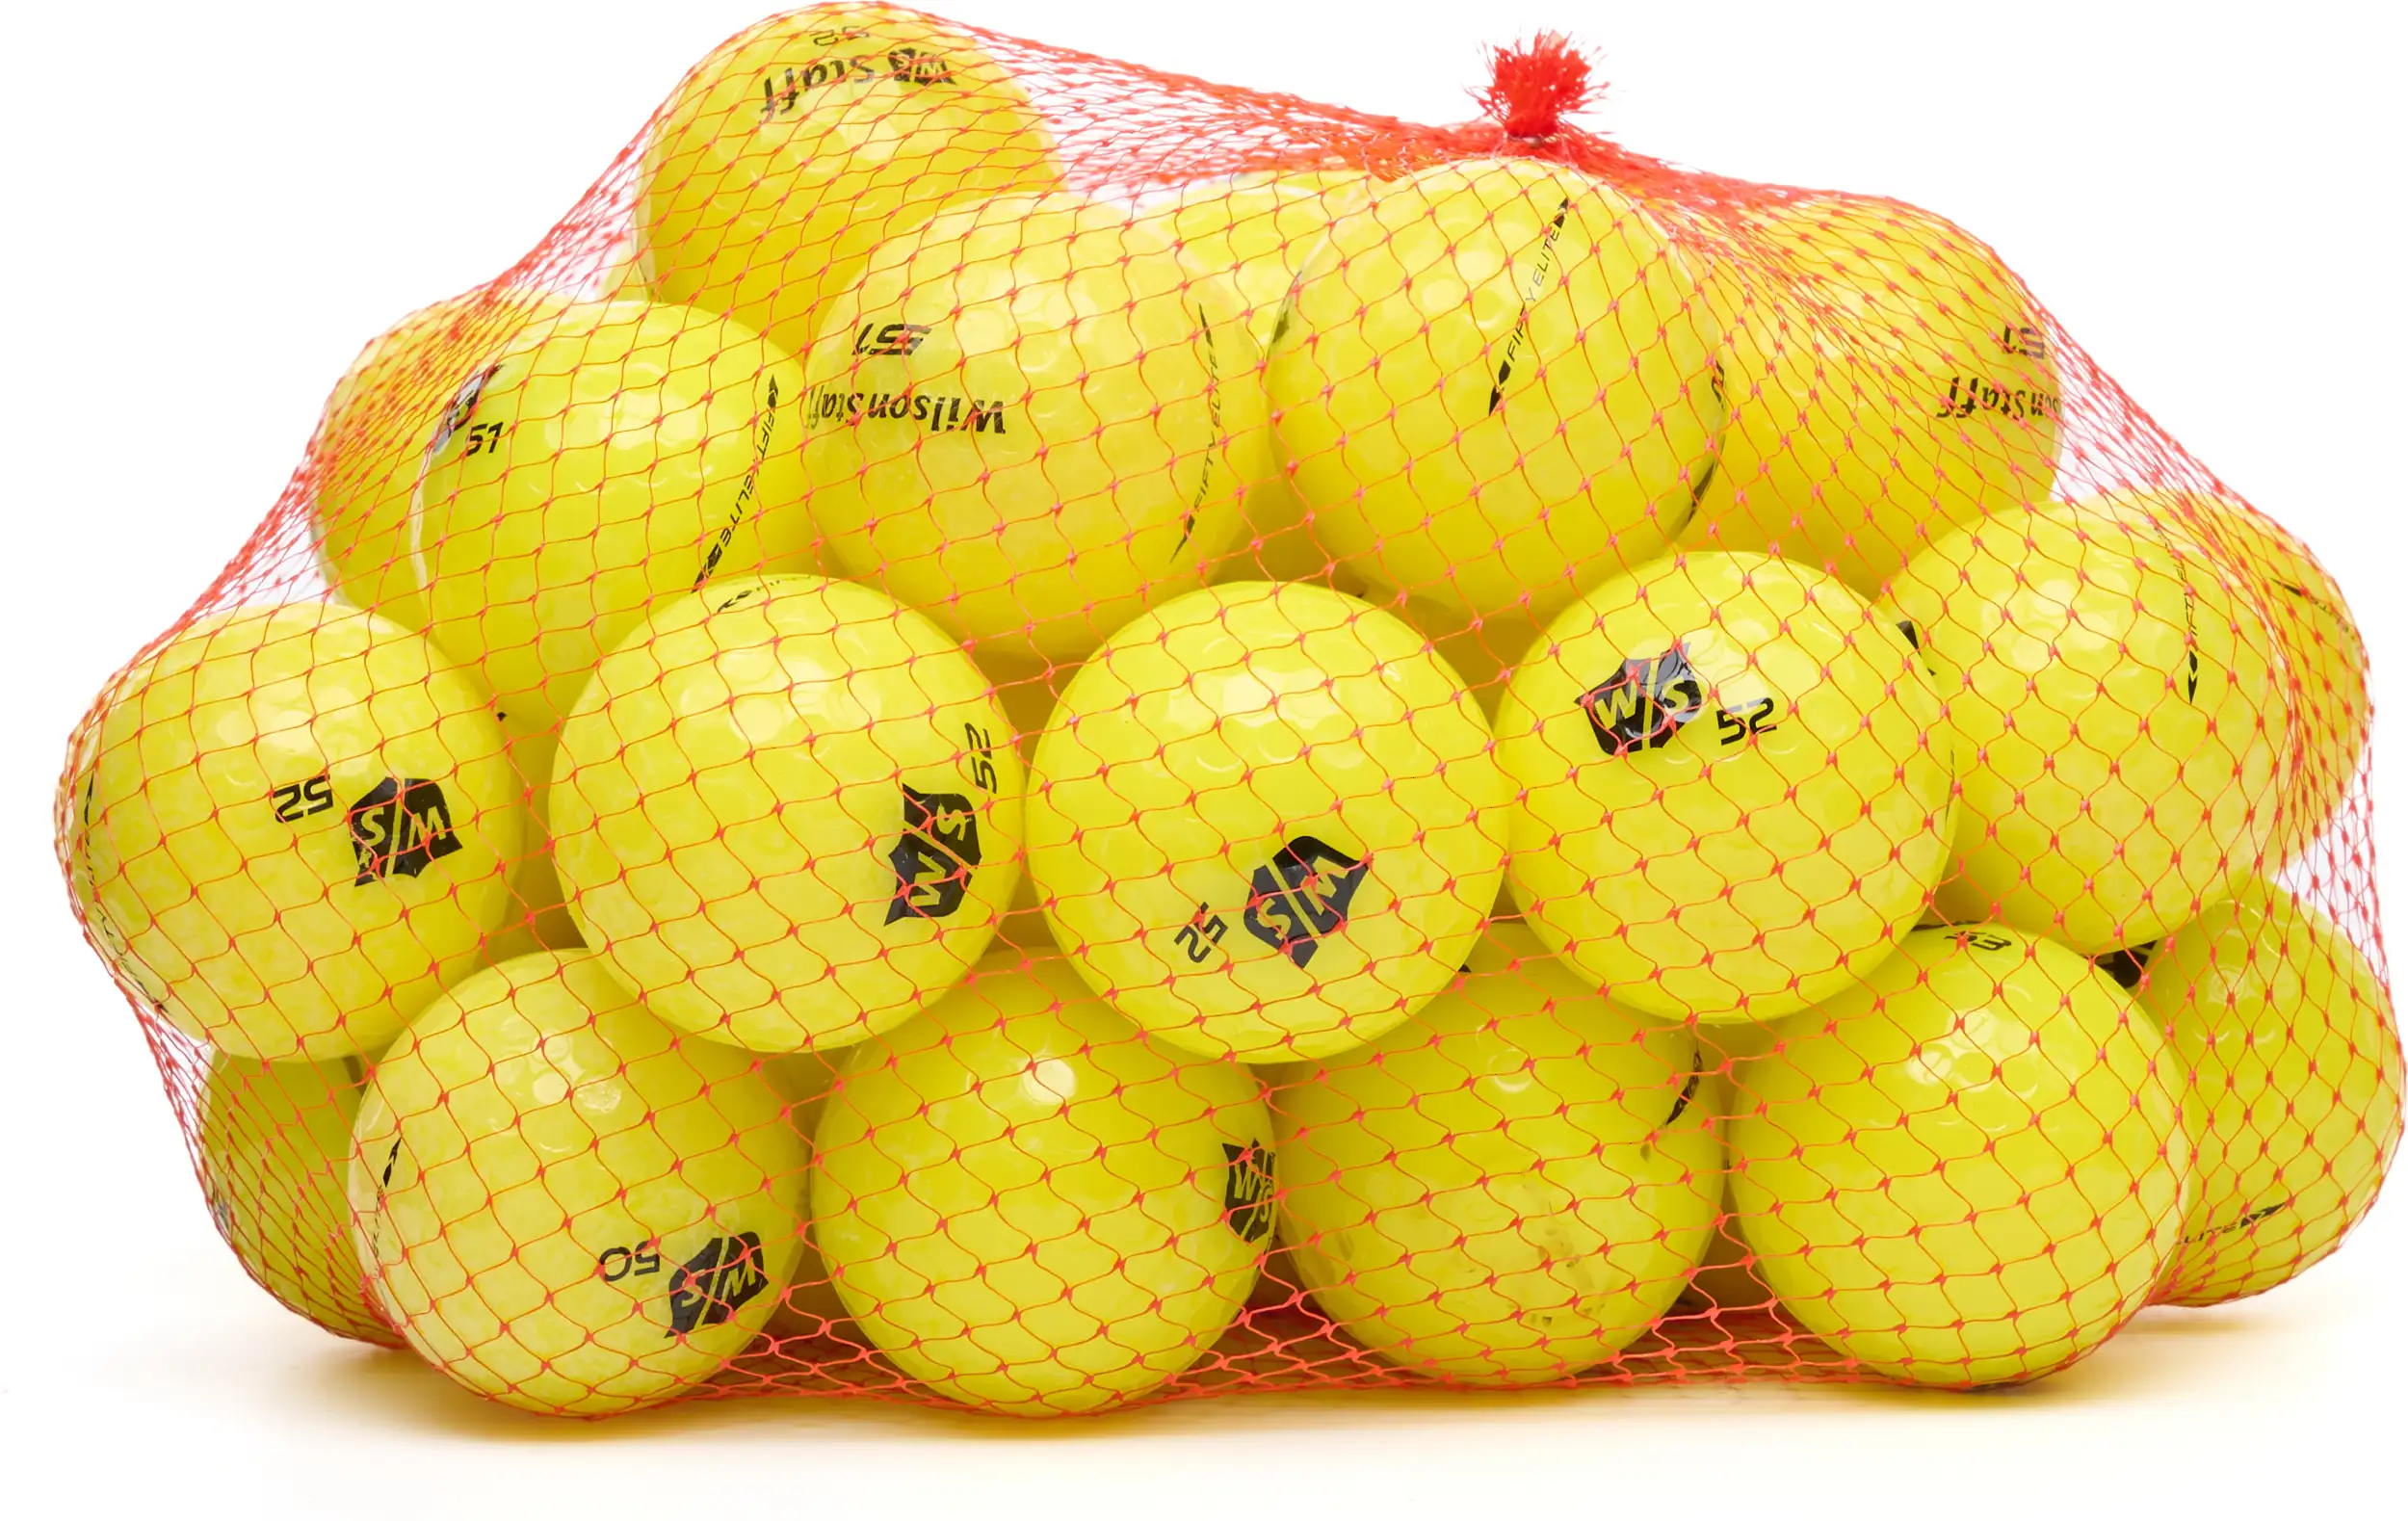 50 Wilson Fifty Elite Lakeballs, yellow